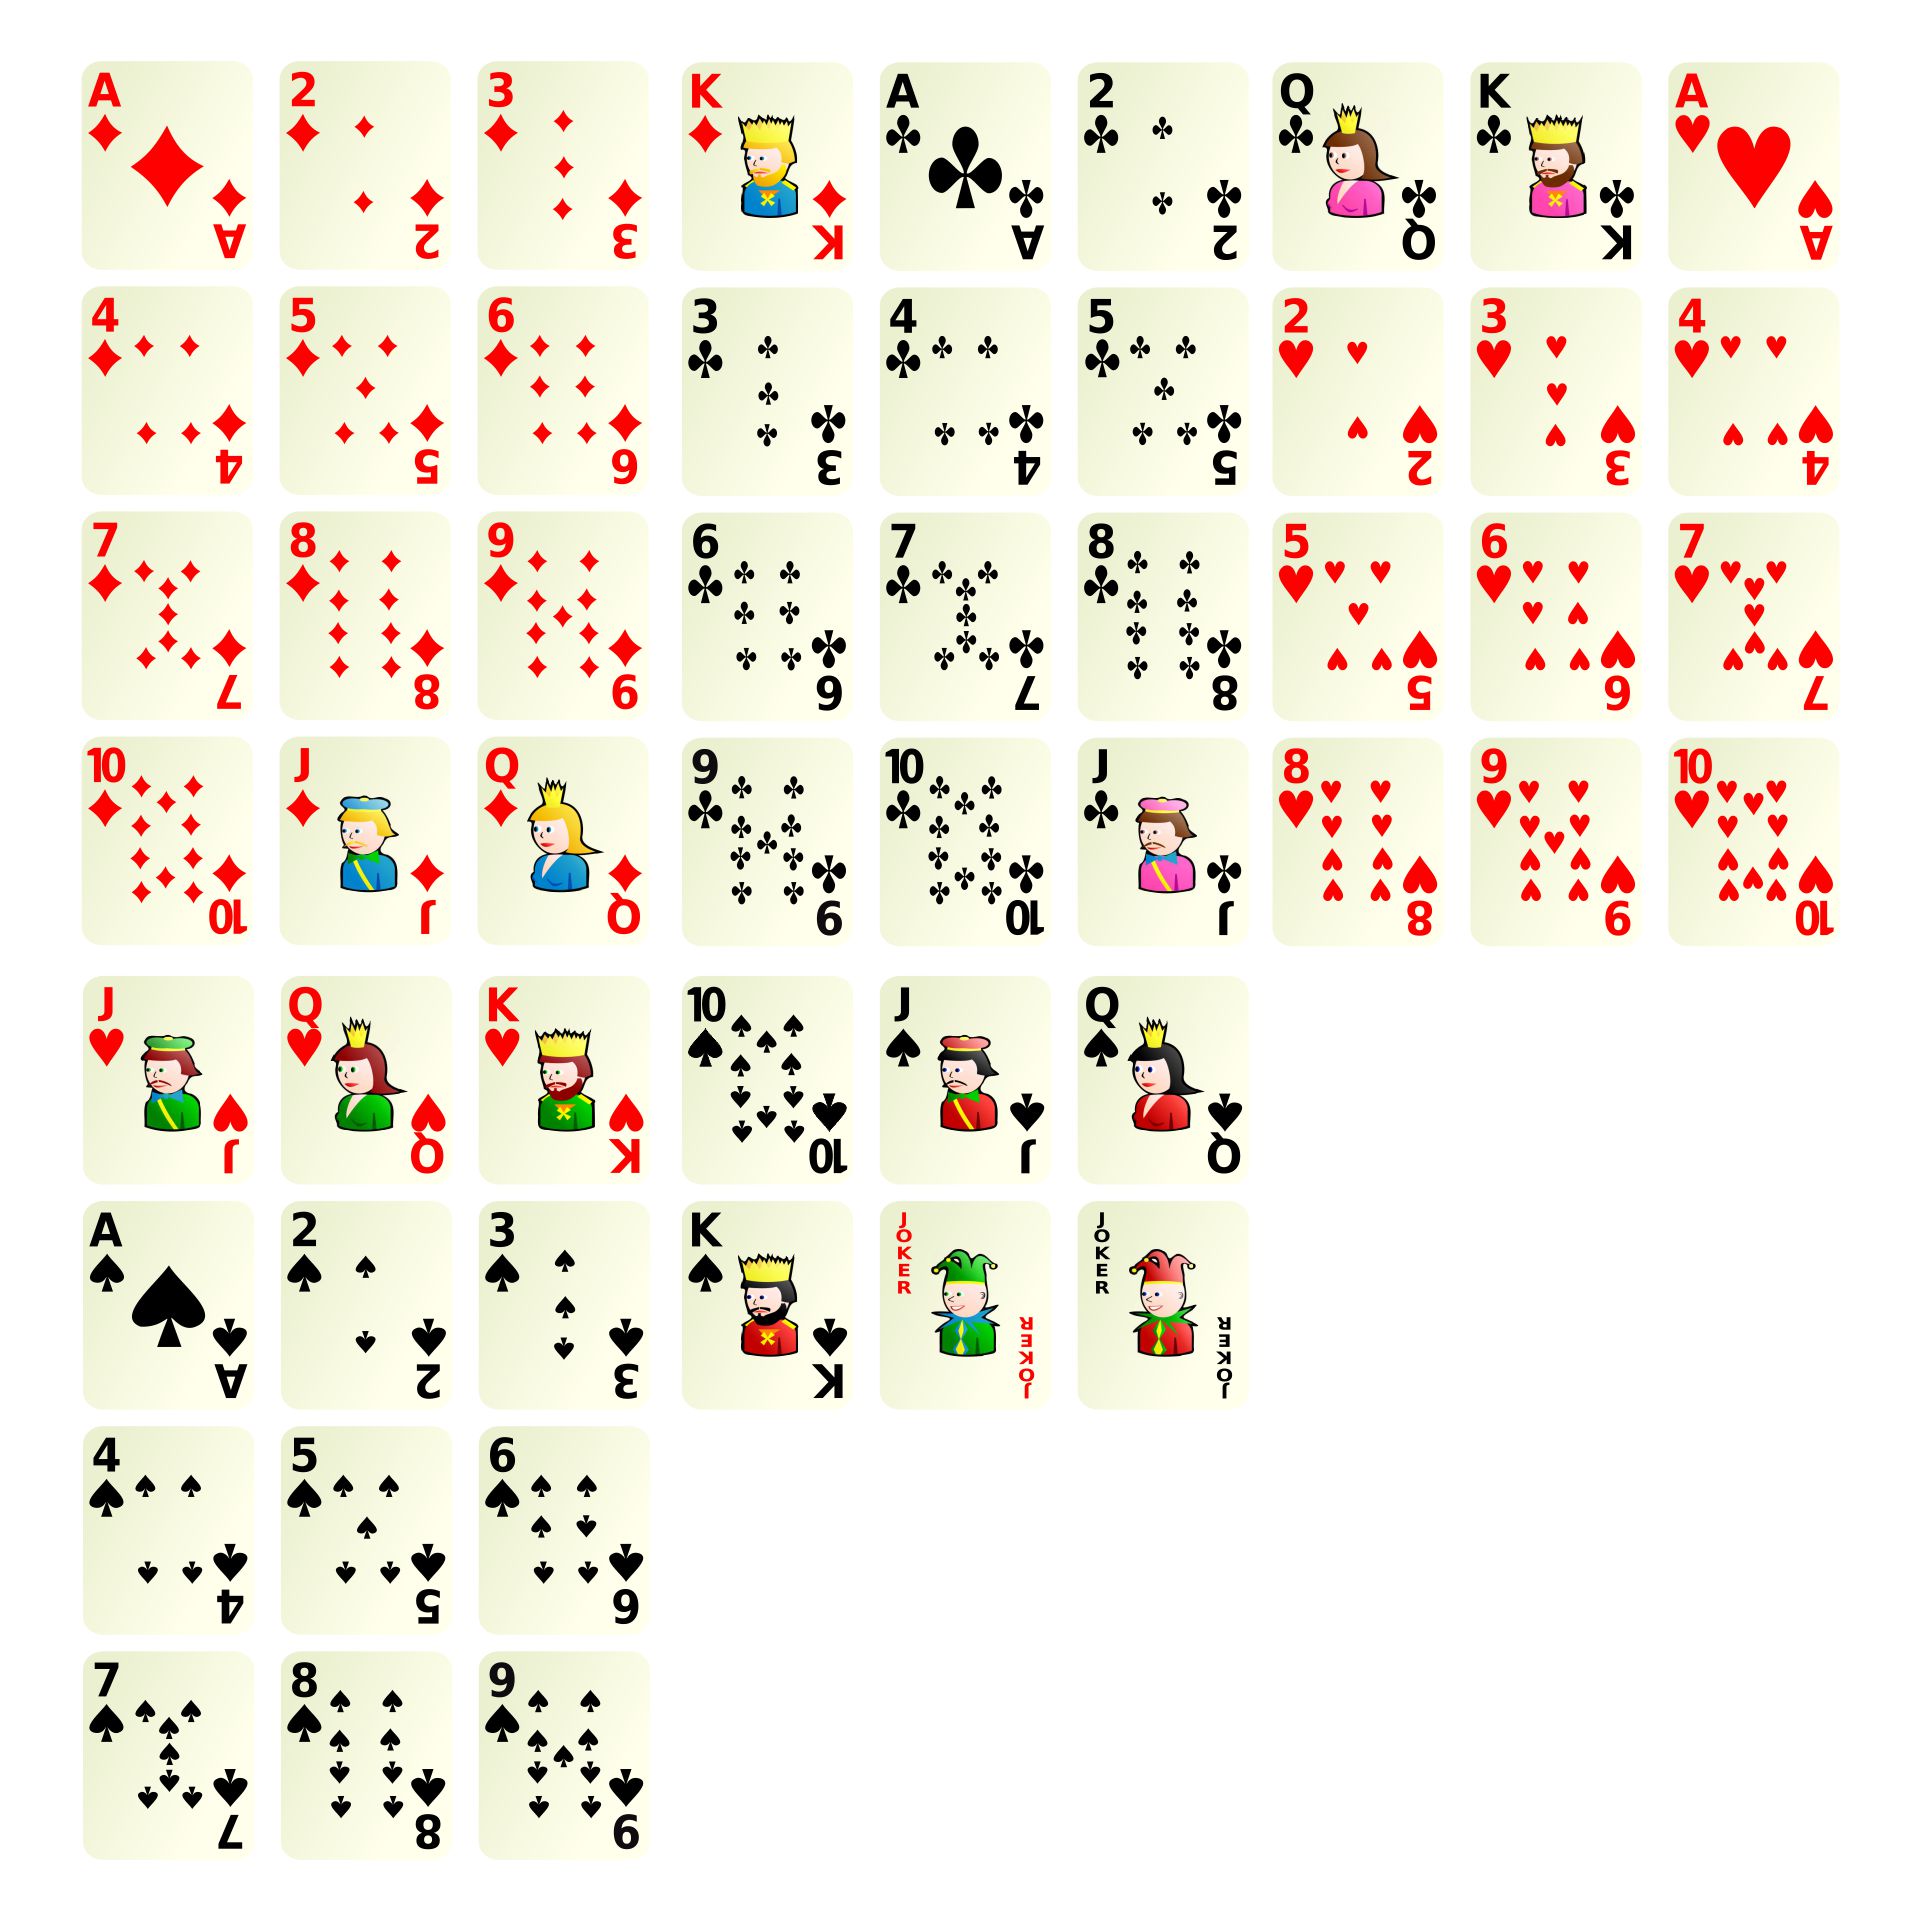 playing-cards-printable